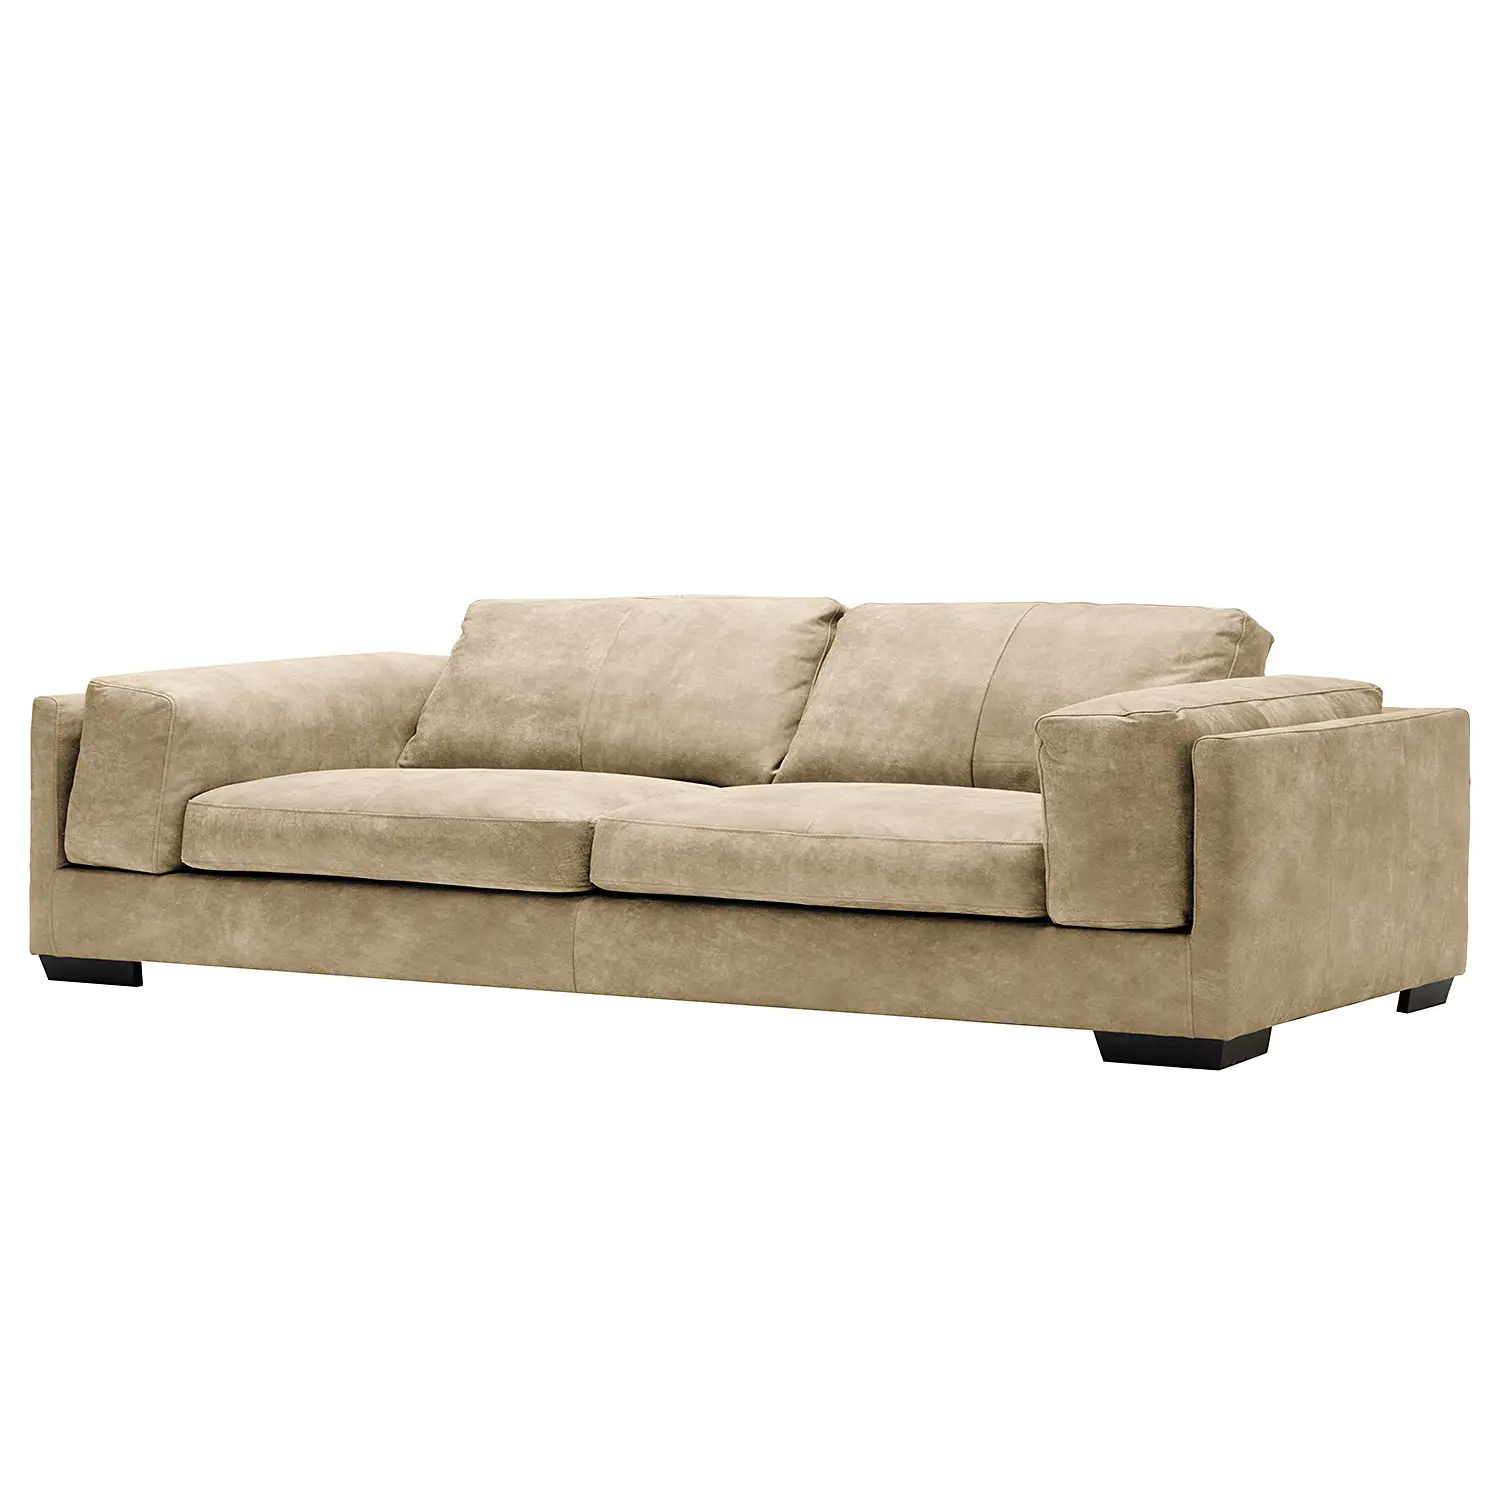 Big-Sofa Jampaw